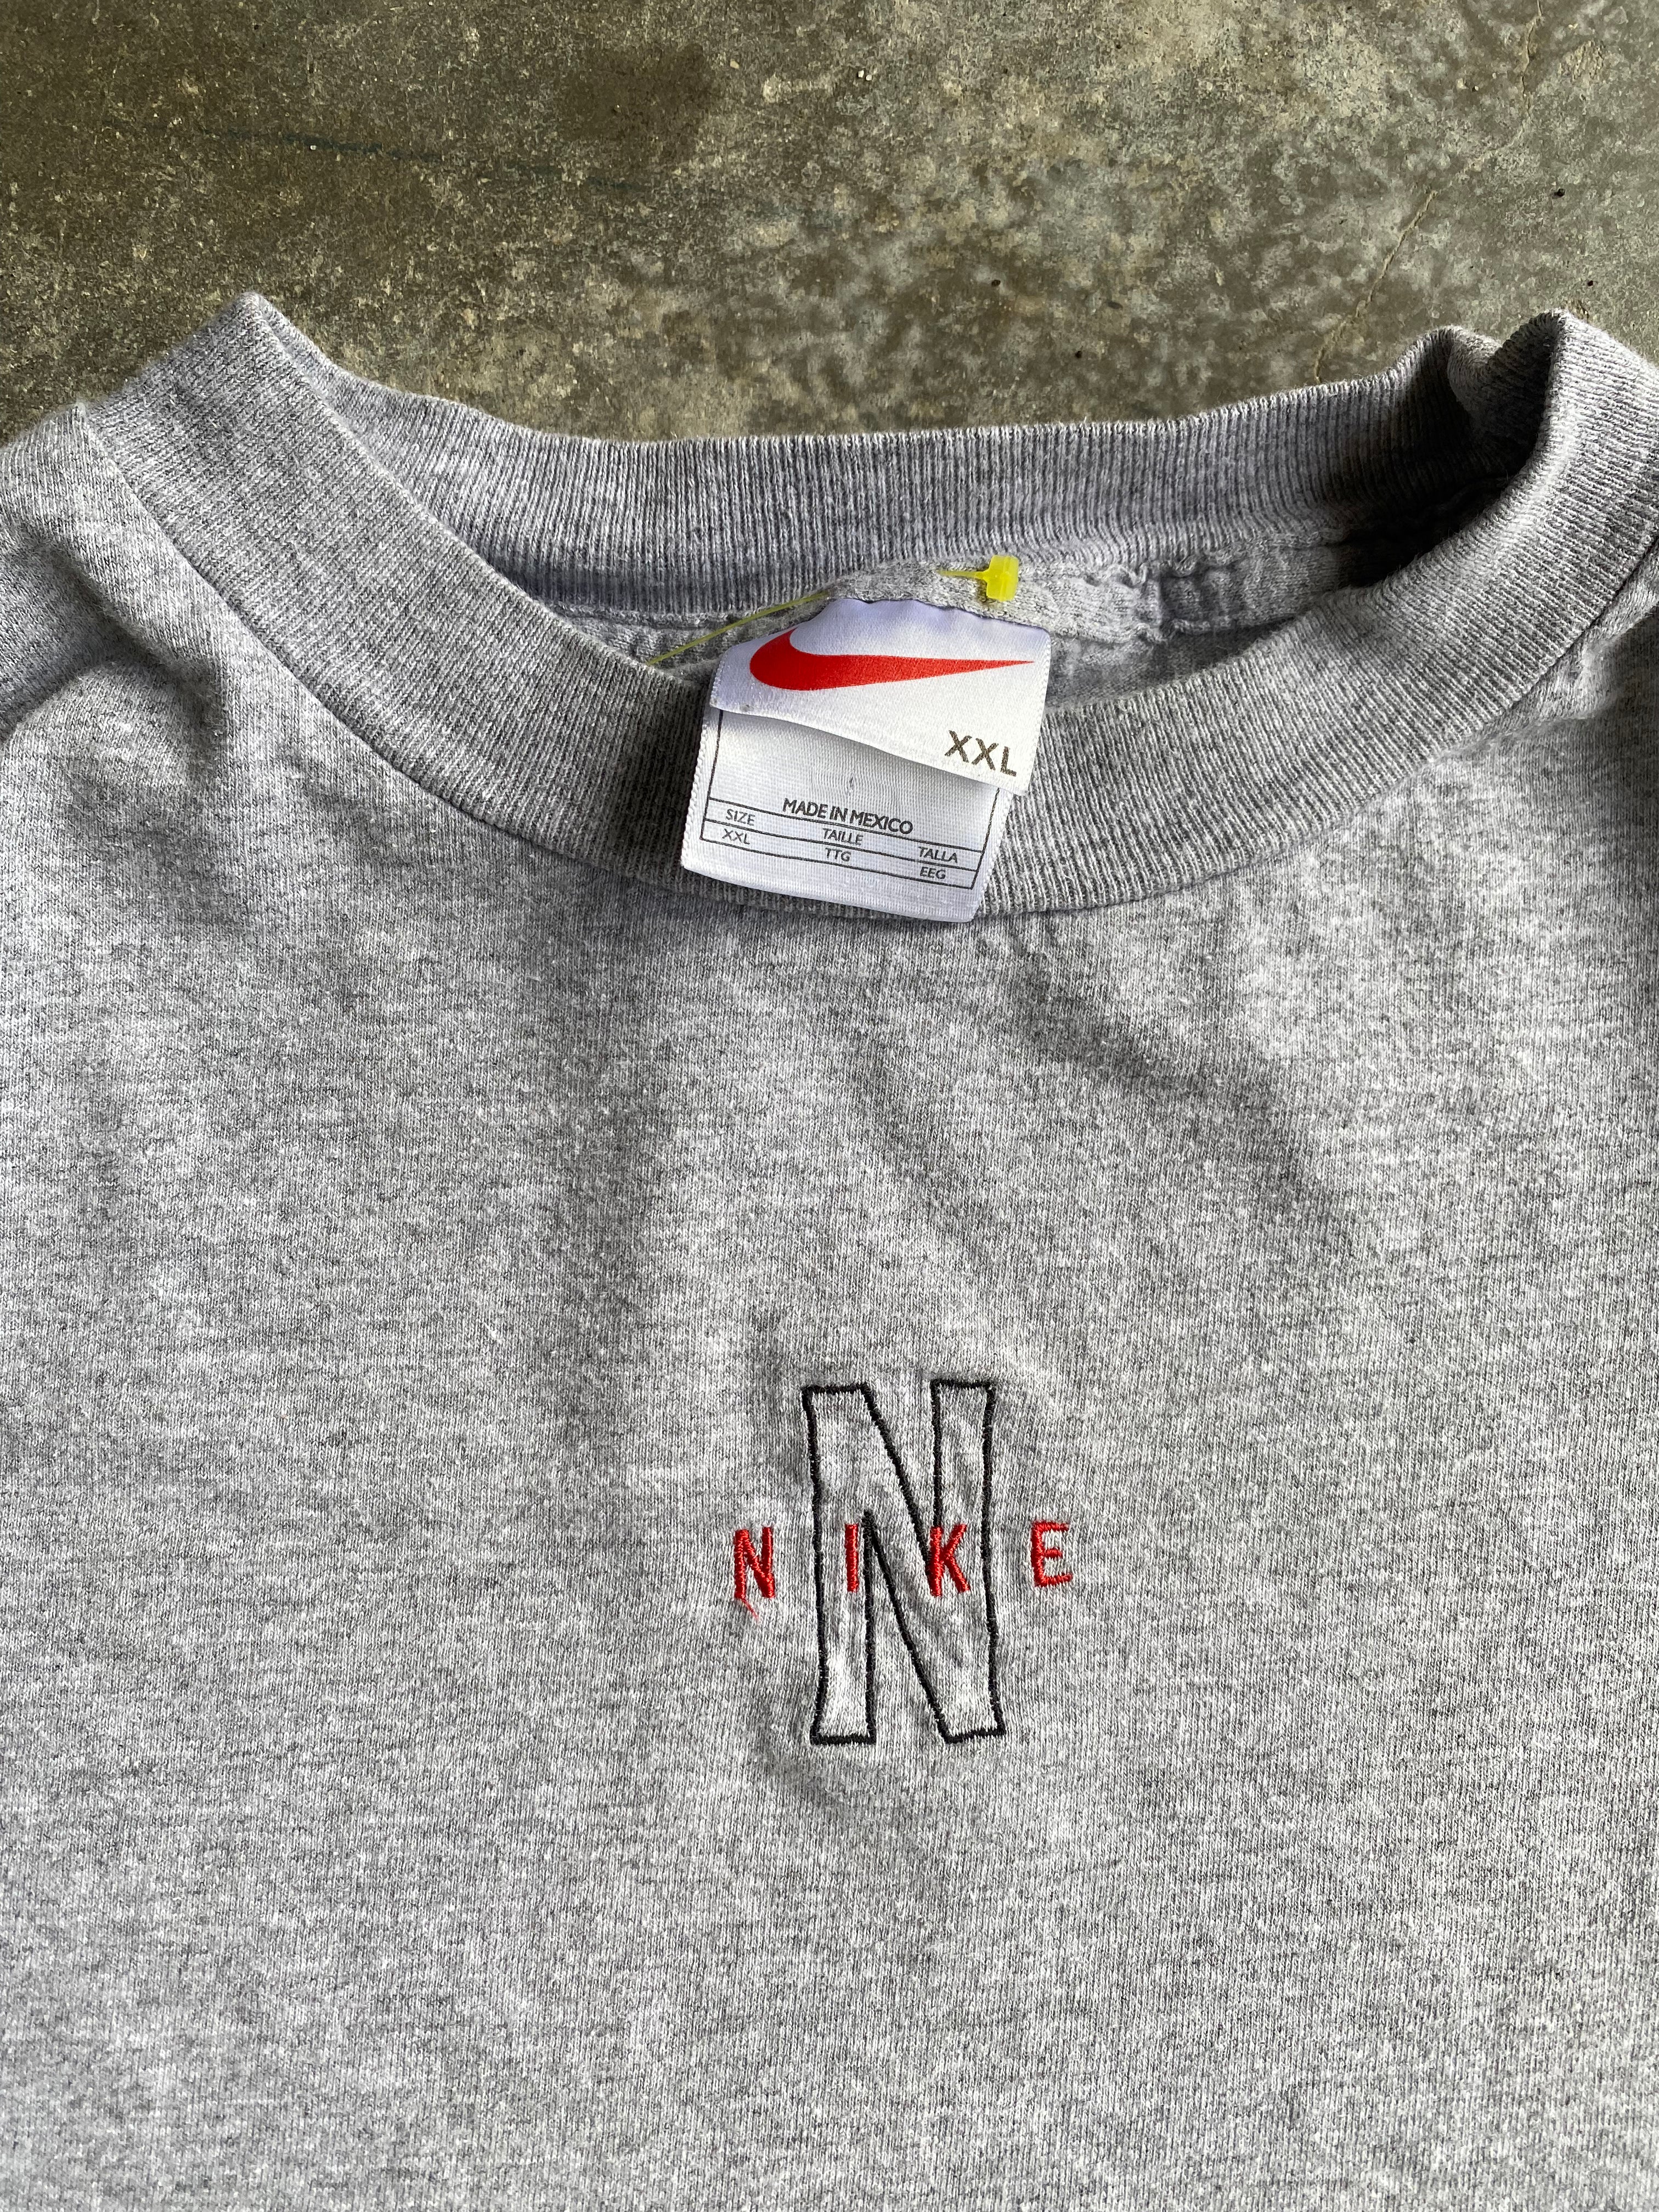 Vintage 90s Nike T-Shirt - 2XL